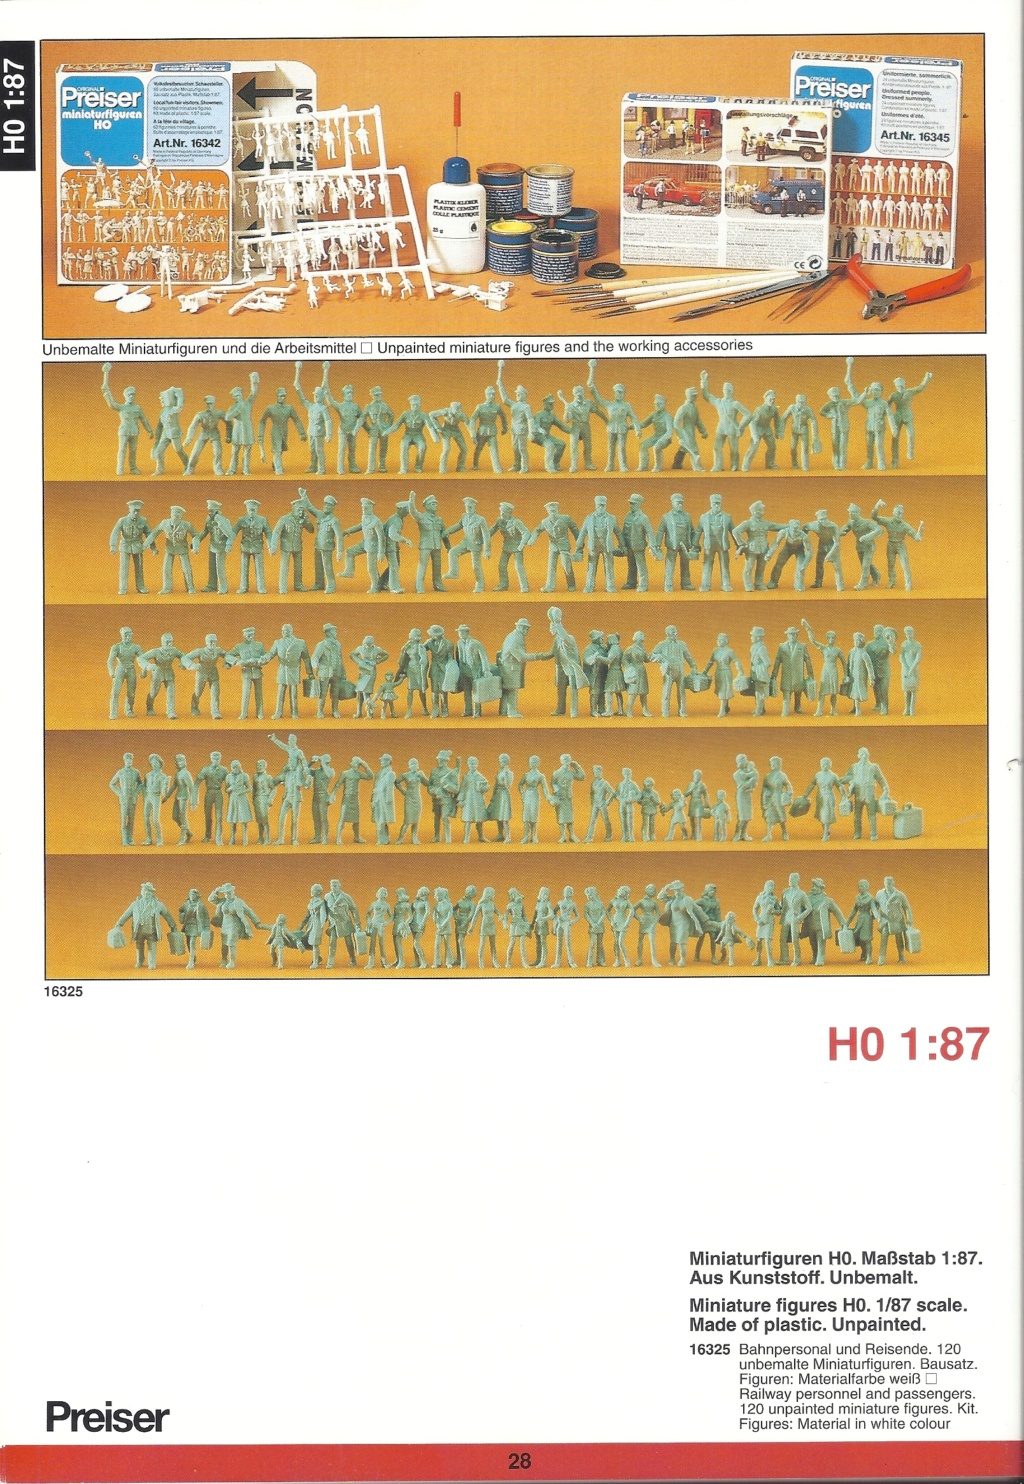 preiser - [PREISER 1996] Catalogue K22 1996 Preis916